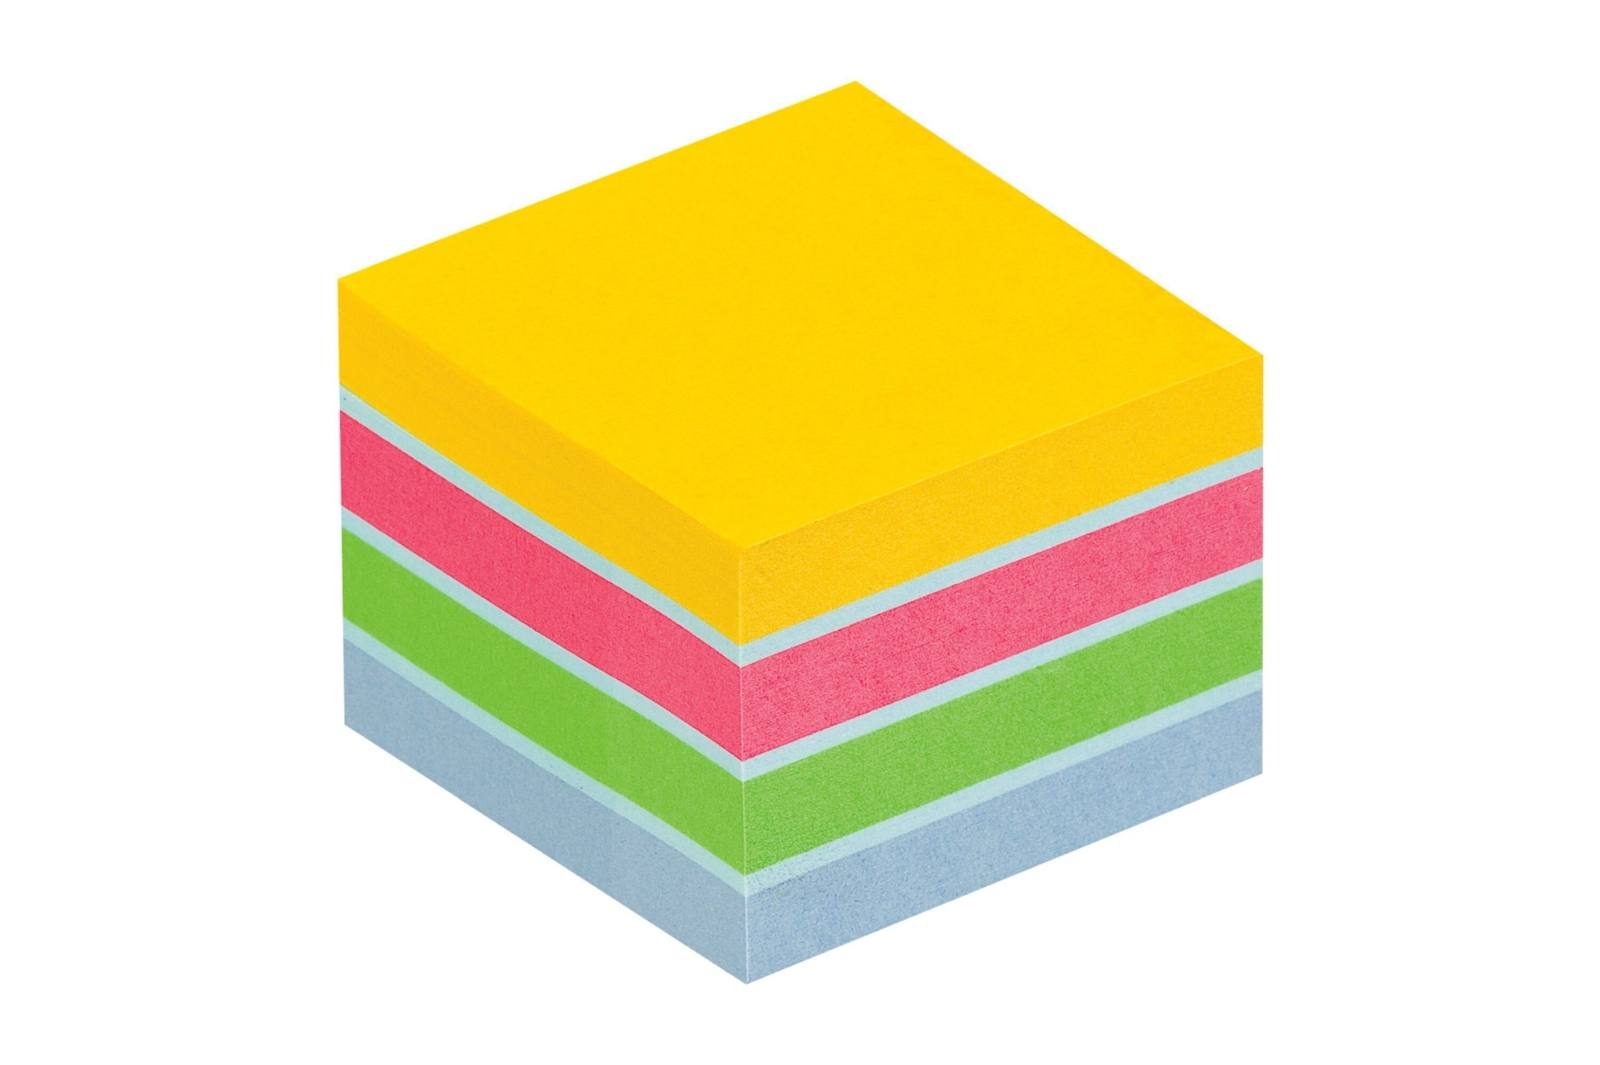 3M Post-it Mini cube 2051-U, 51 mm x 51 mm, ultra blue, ultra yellow, ultra green, ultra pink, 1 cube with 400 sheets each